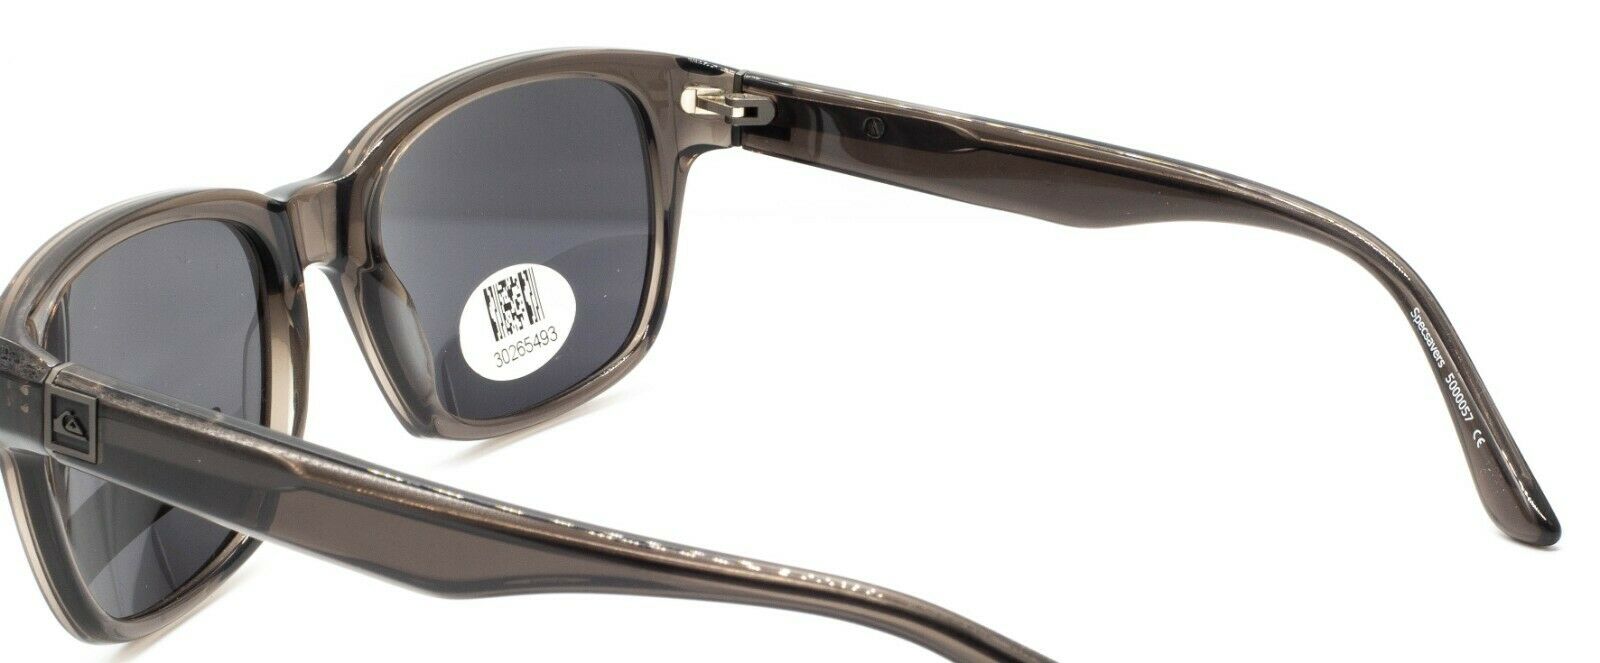 New Glasses Sun Rx QS Shades 101 55mm Eyewear 30265493 QUIKSILVER Eyewear GGV - - Sunglasses